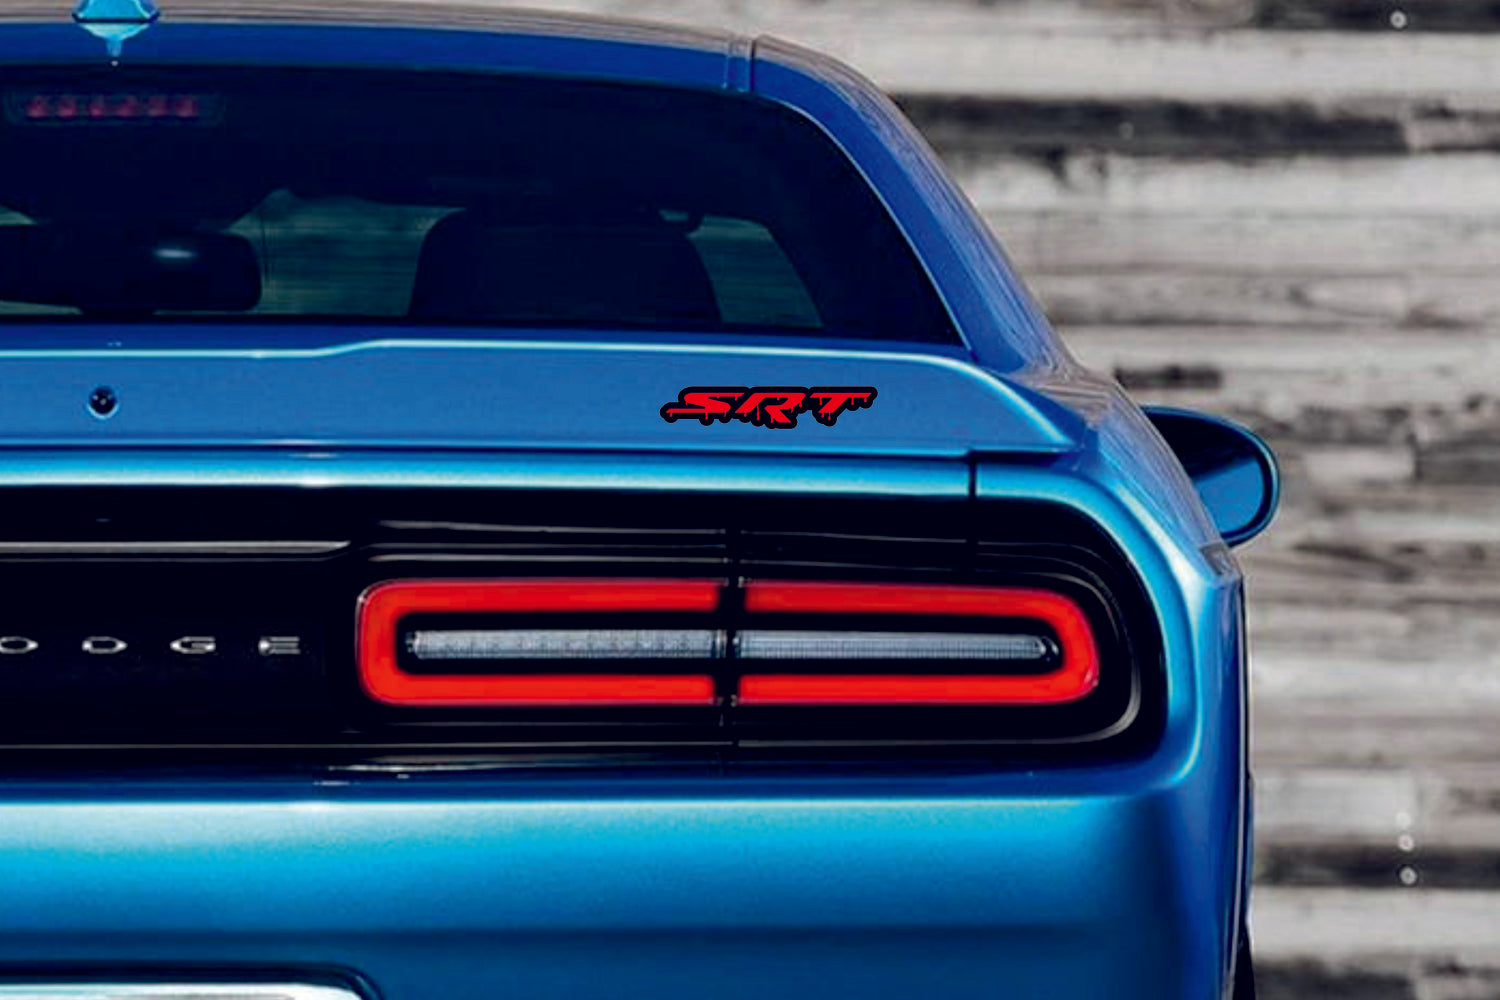 Dodge tailgate trunk rear emblem with SRT Blood logo - decoinfabric